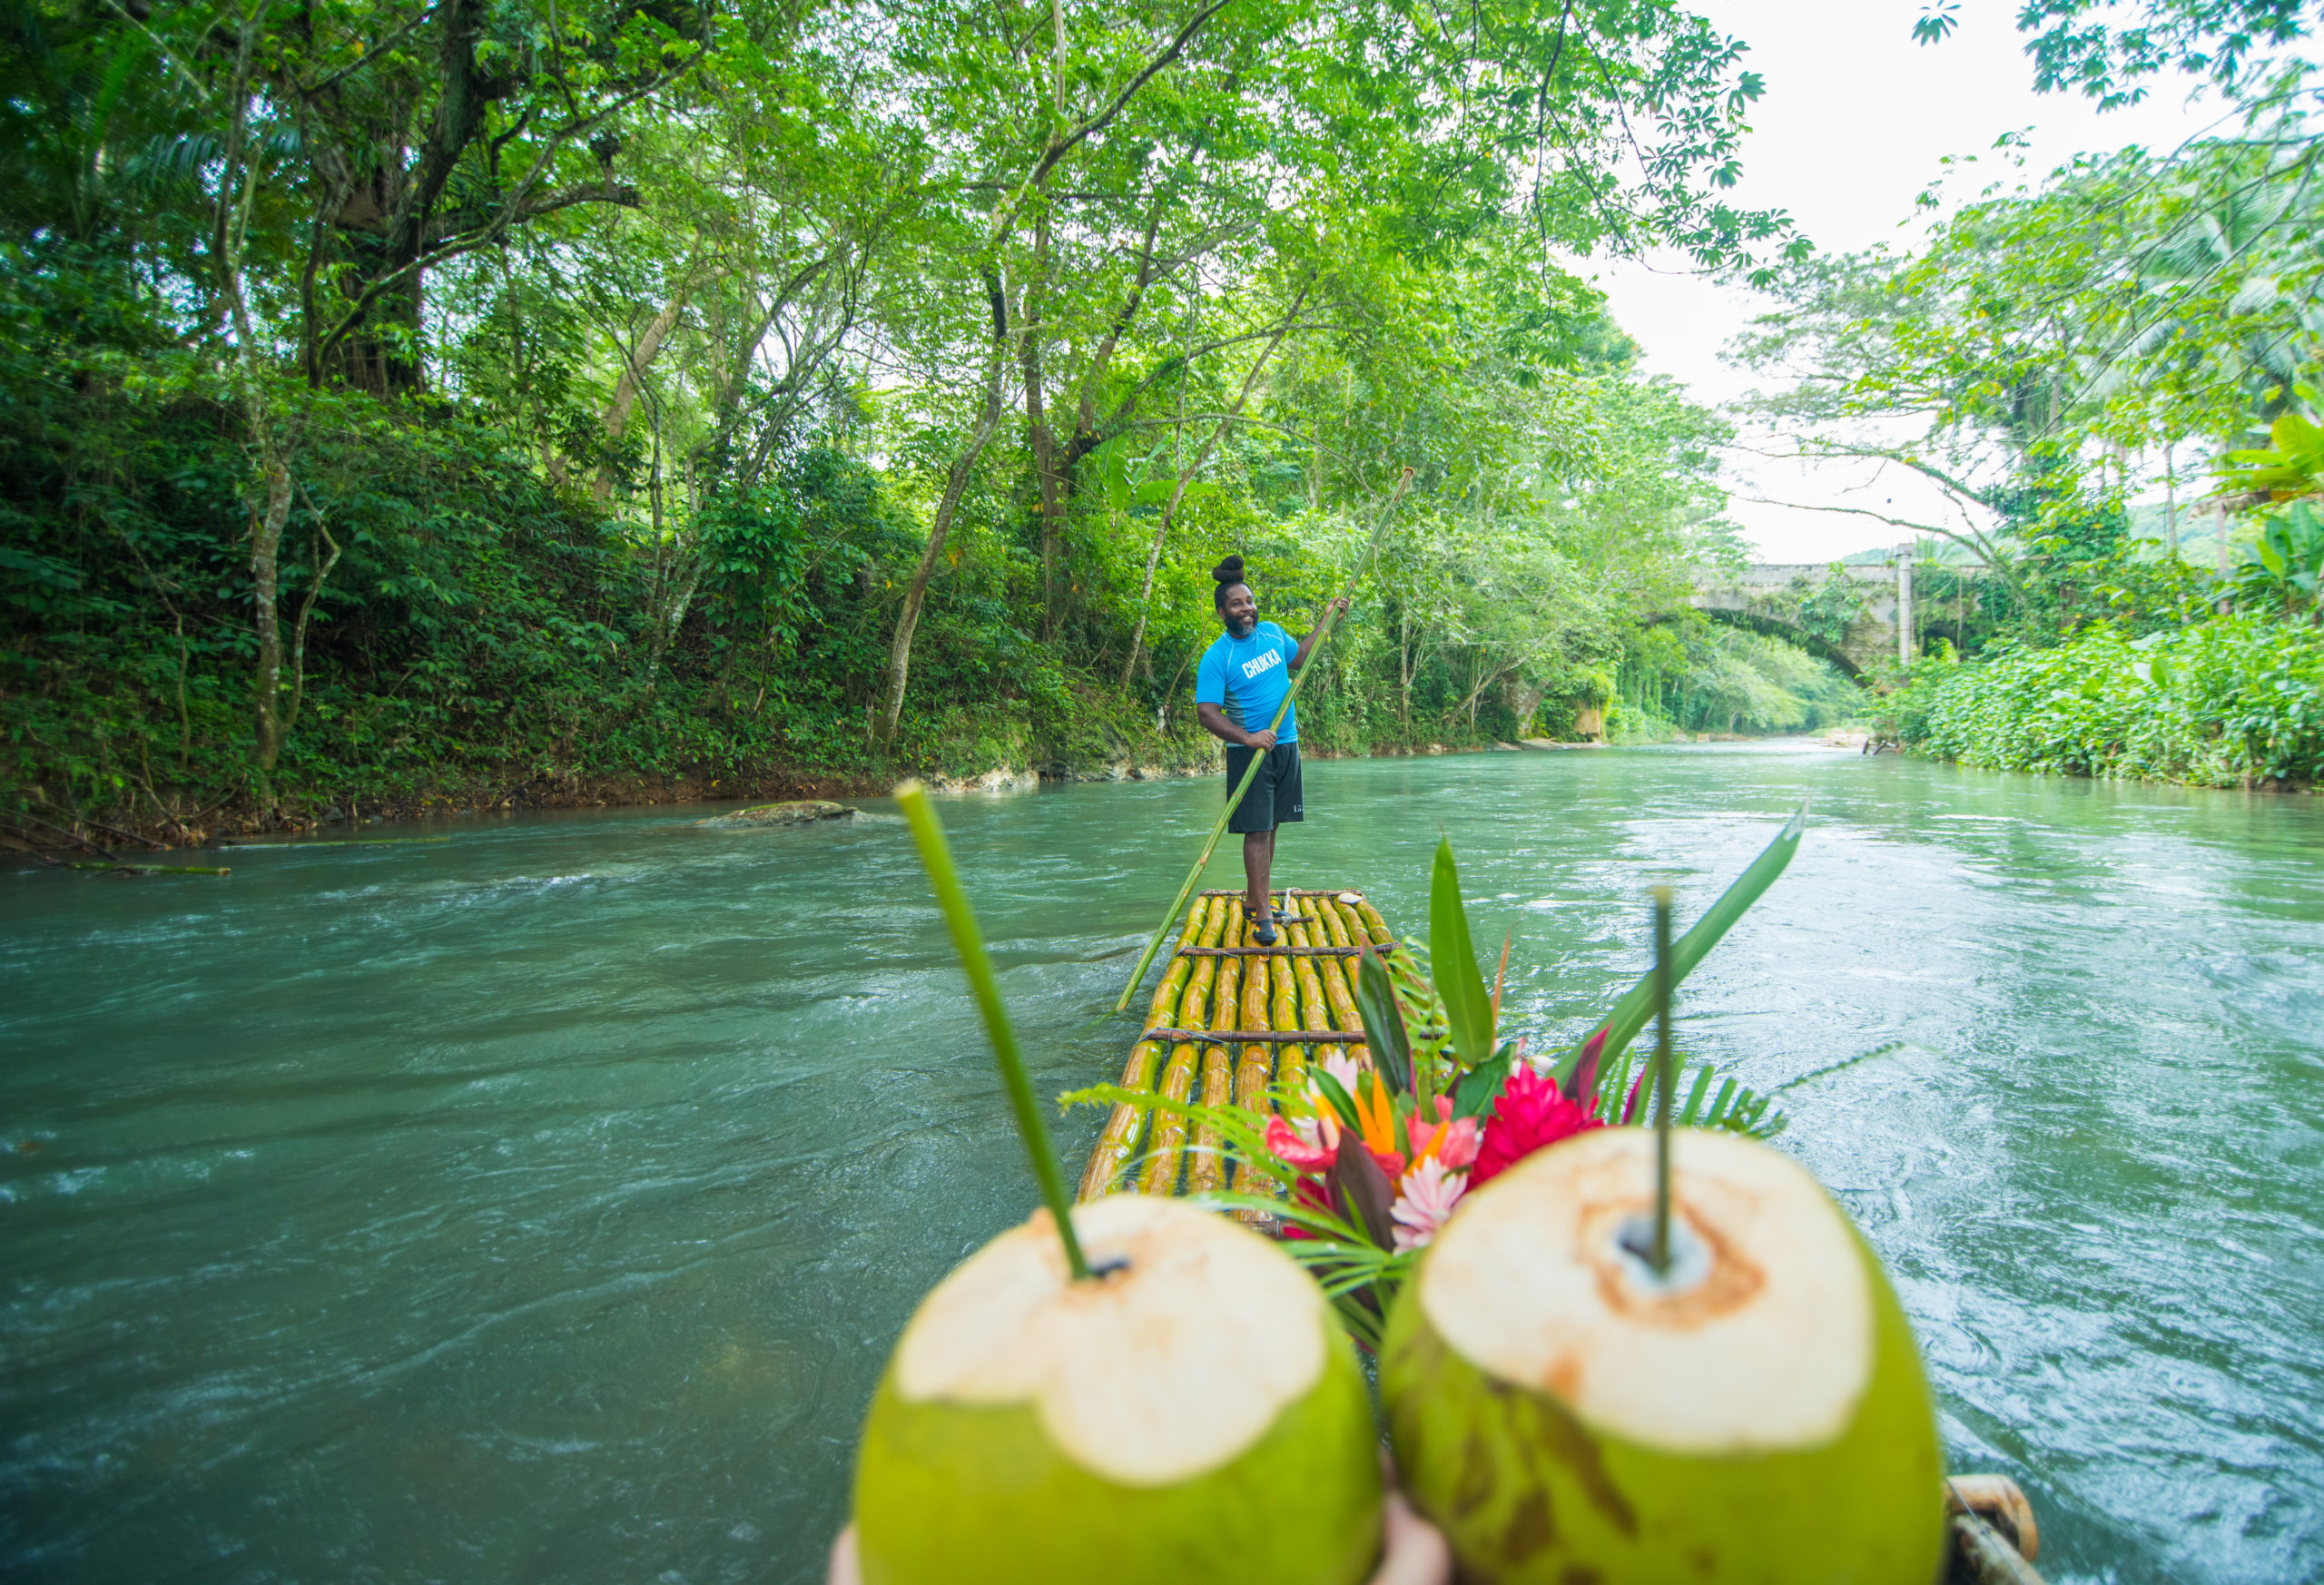 Bamboo rafting experiences